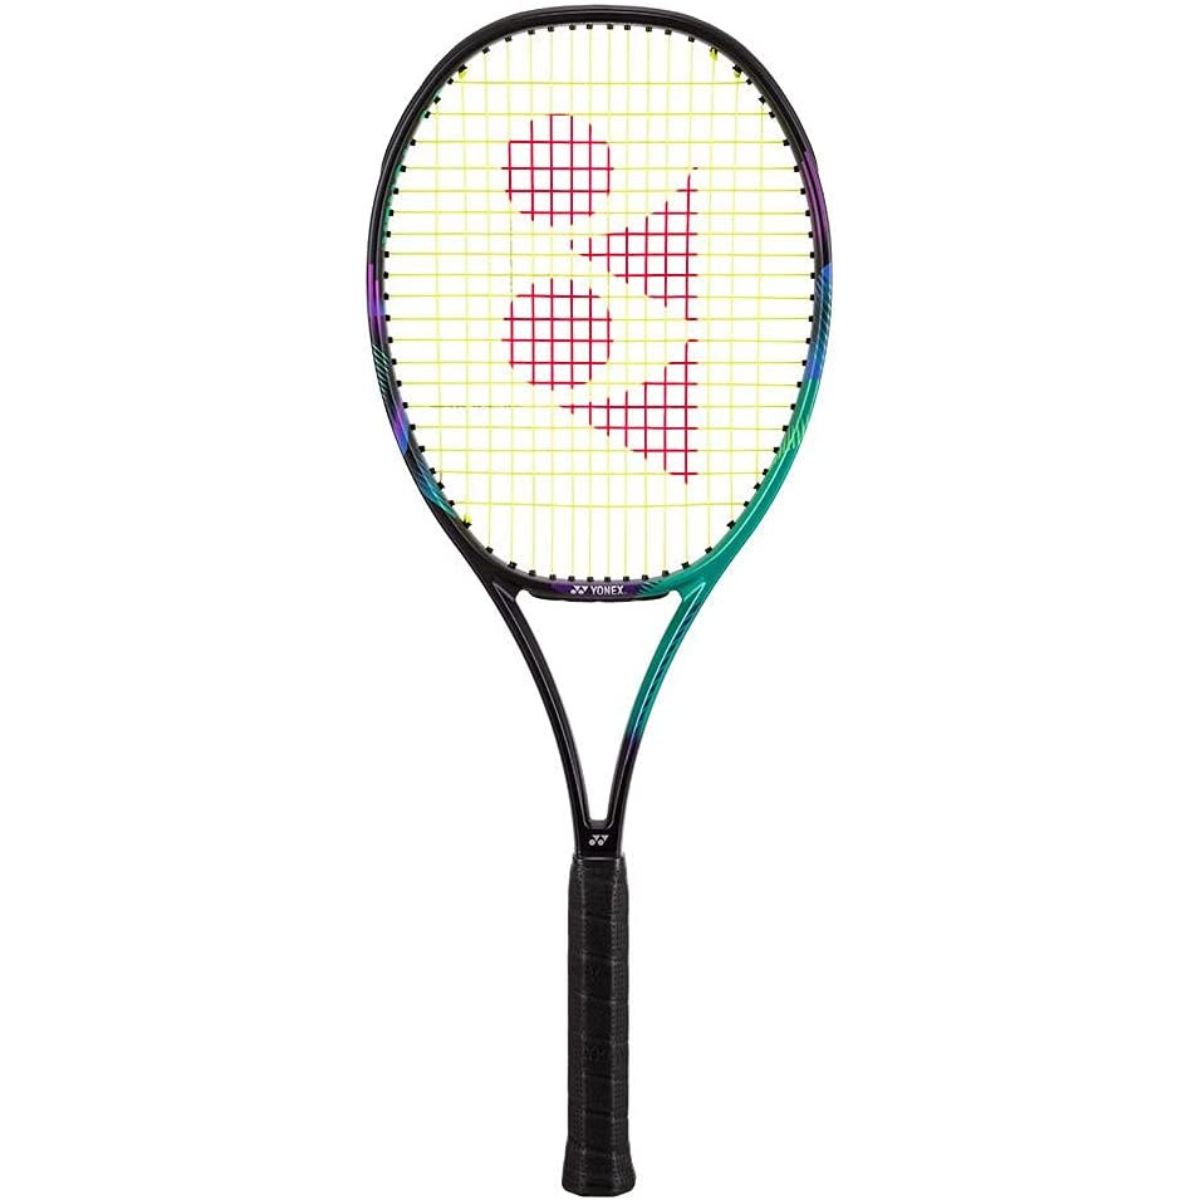 The Best Yonex Tennis Rackets Options: Yonex VCORE Pro 97